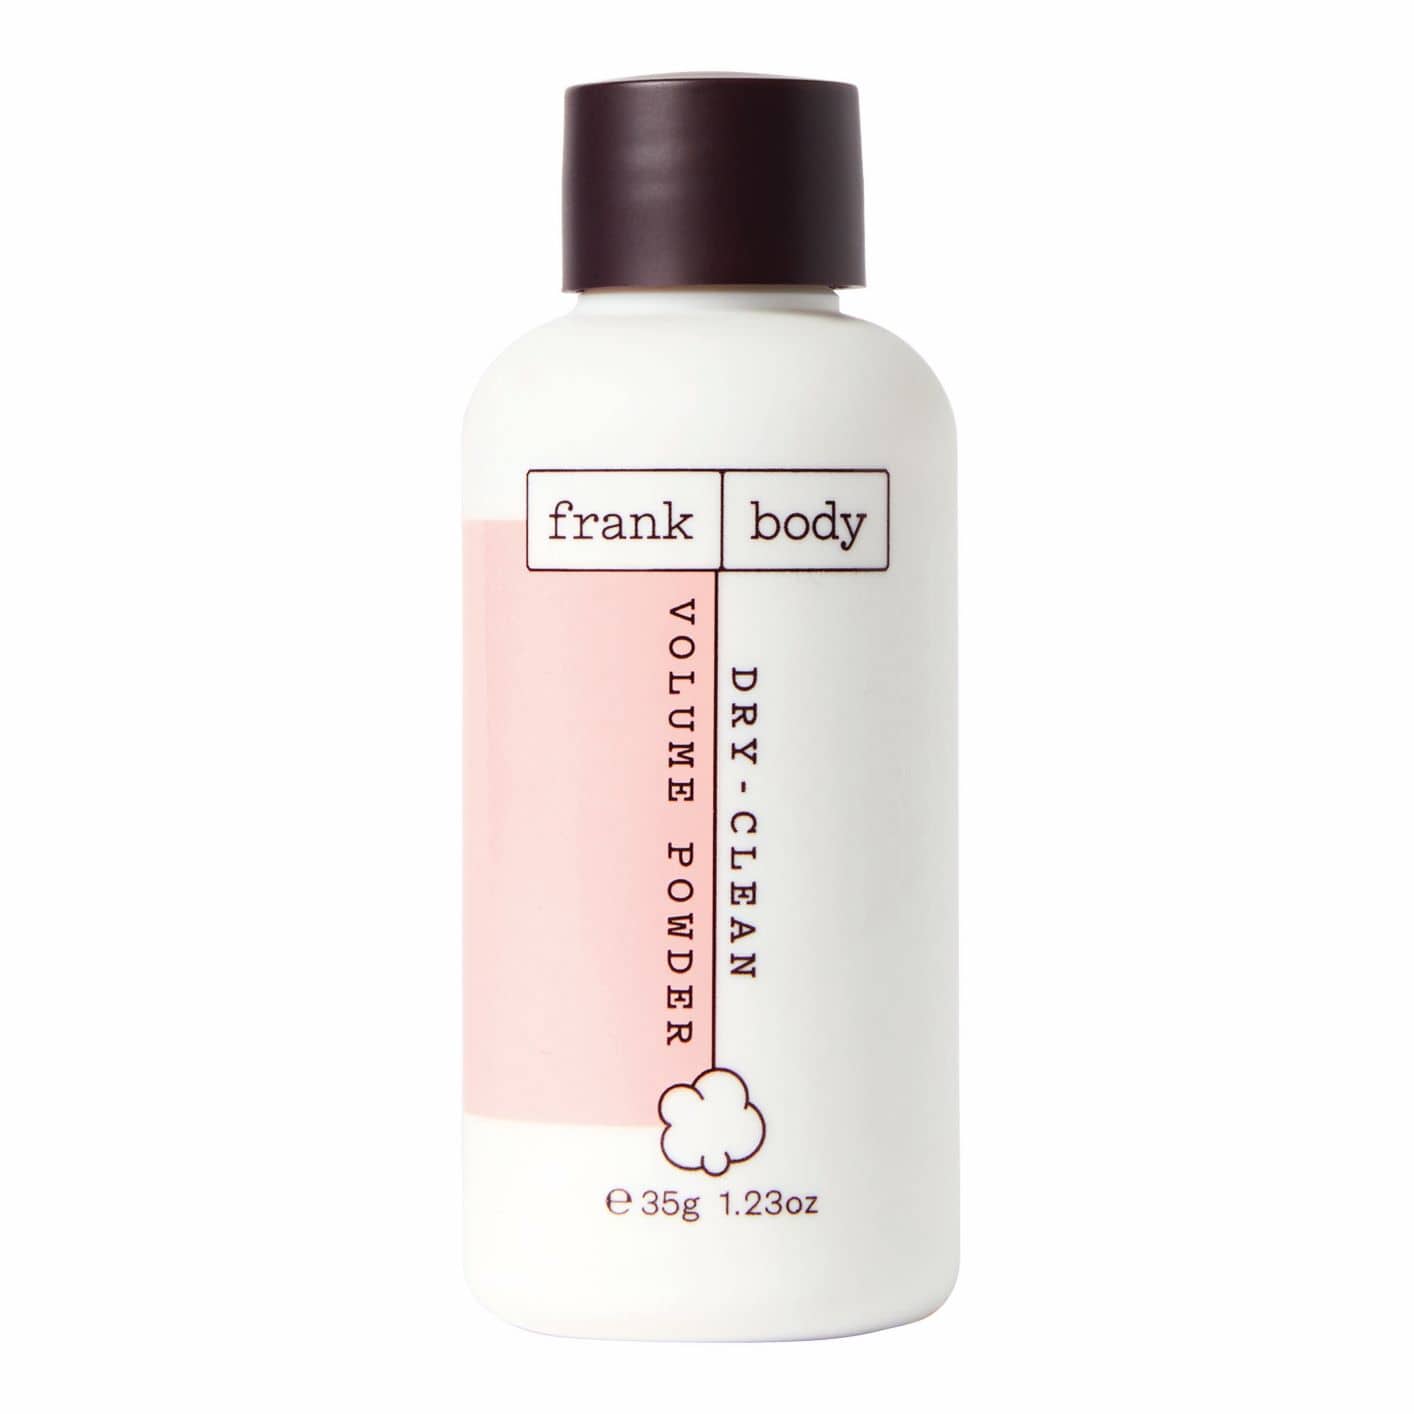 Frank body dry shampoo